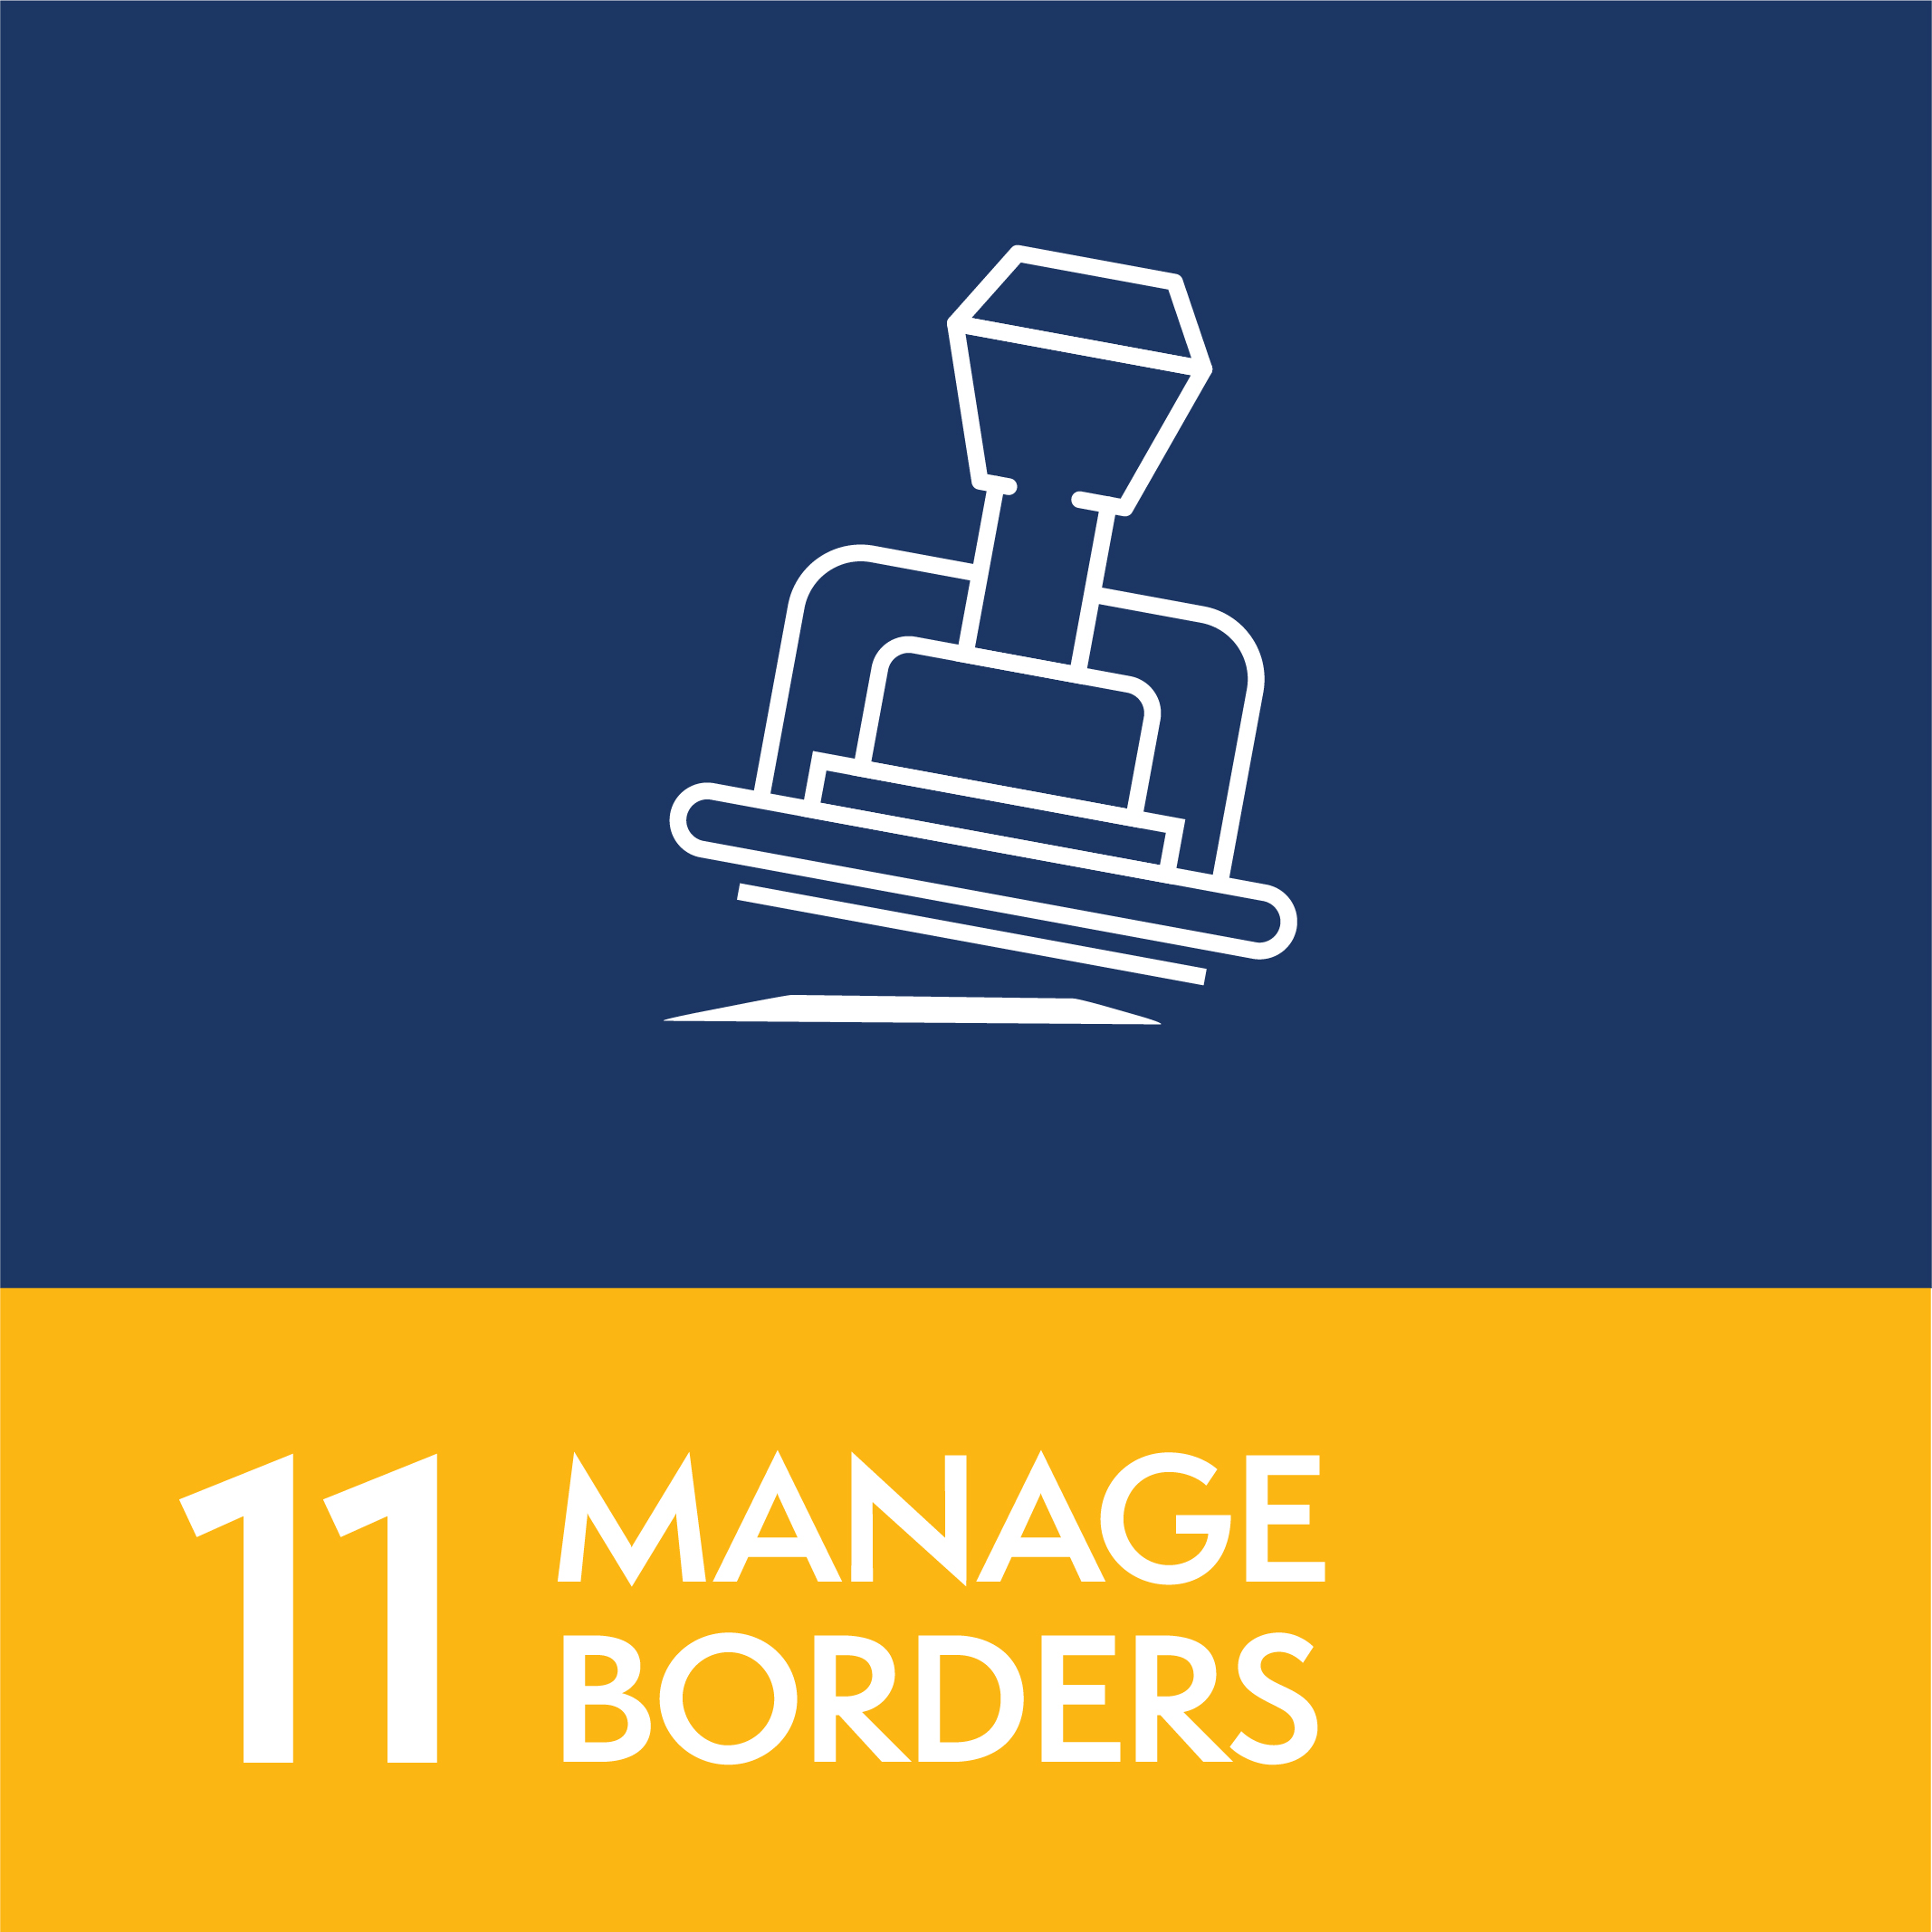 11 - Manage borders